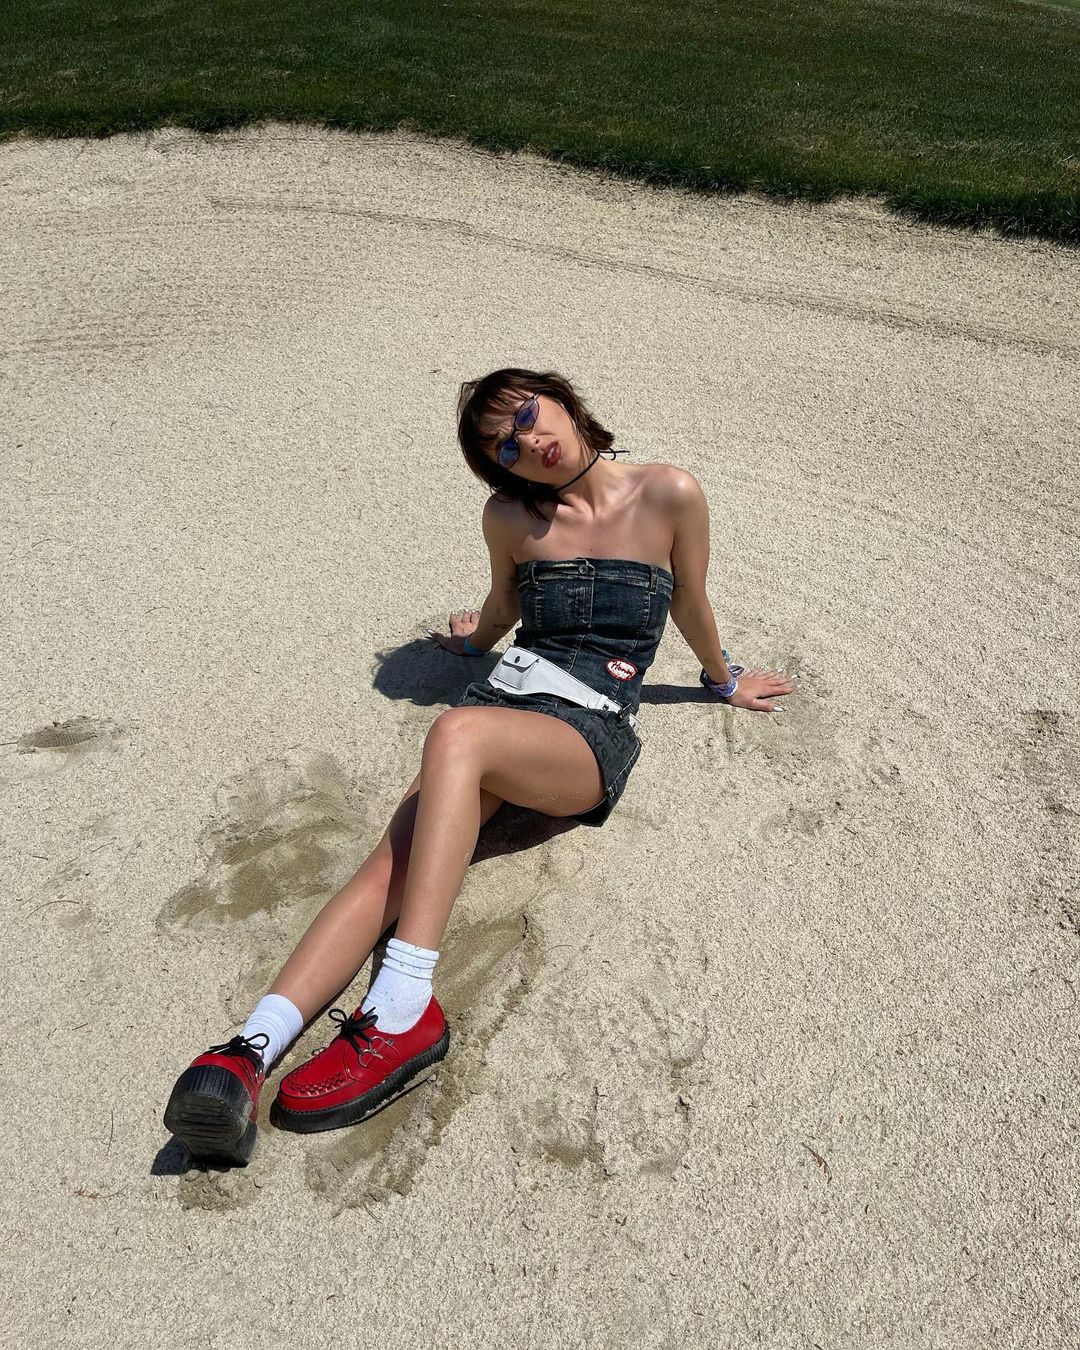 Kmart recreates Hailey Bieber's Coachella outfit for $55